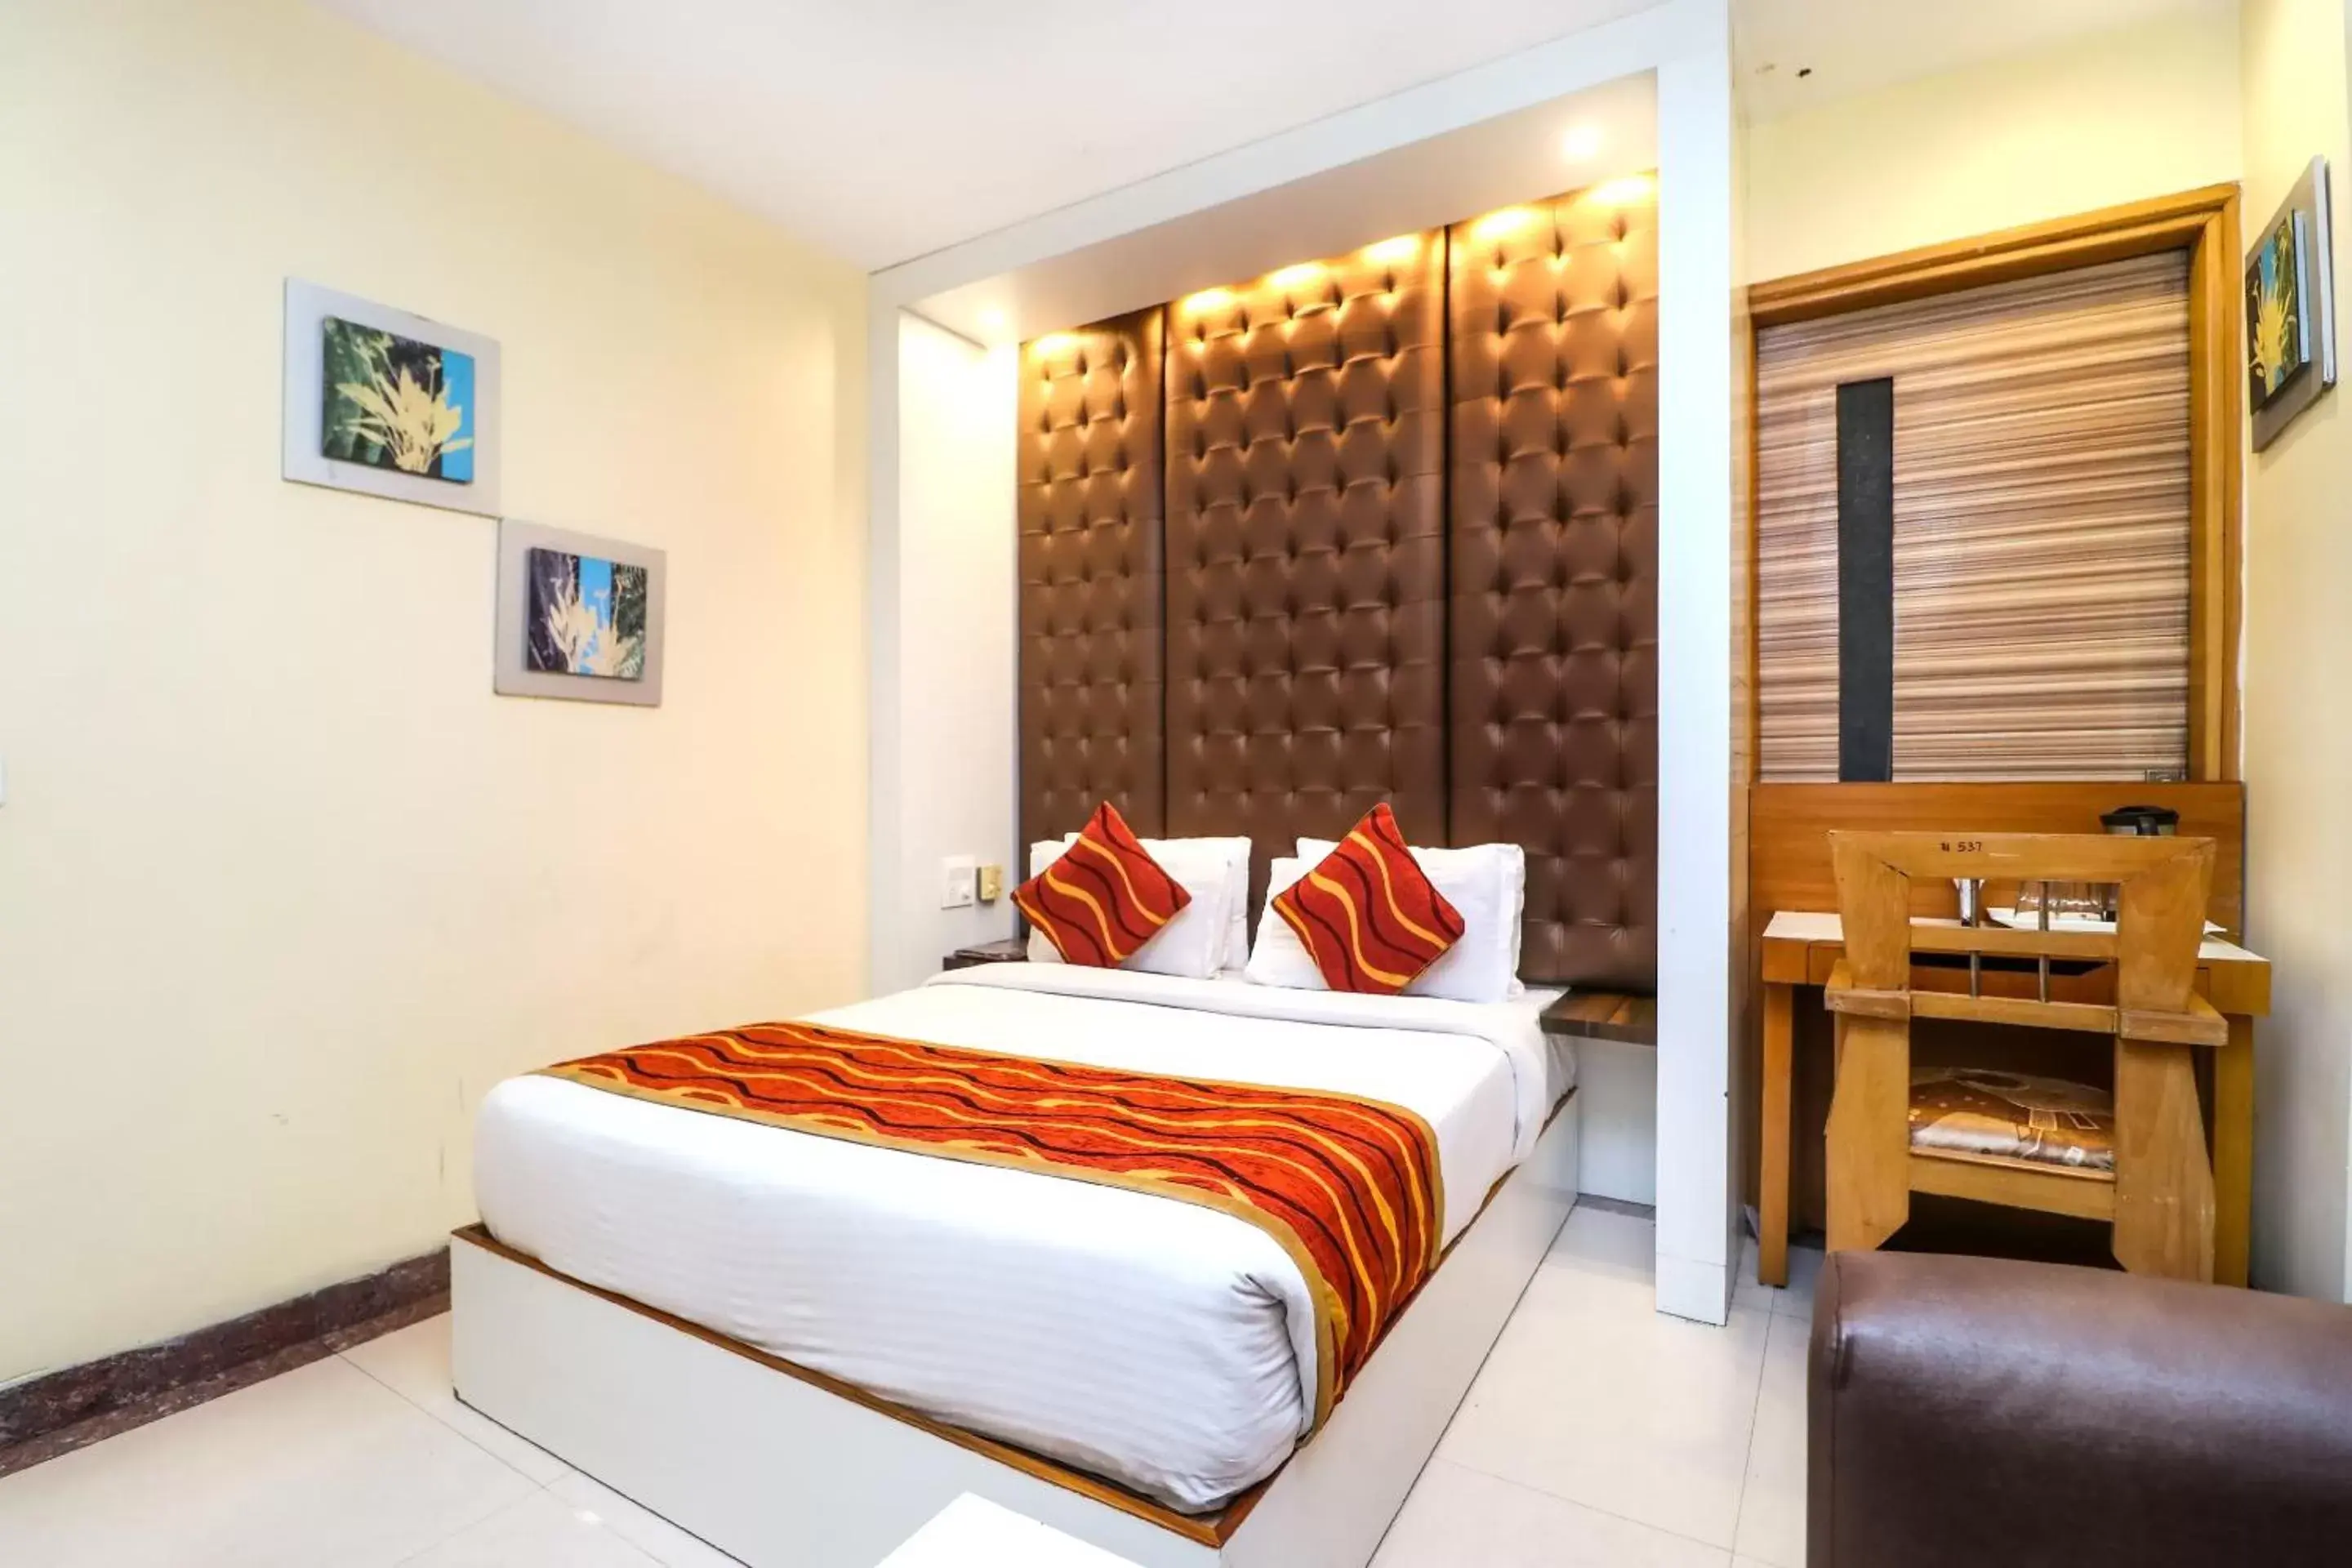 Bed, Room Photo in Hotel Rajshree & Spa